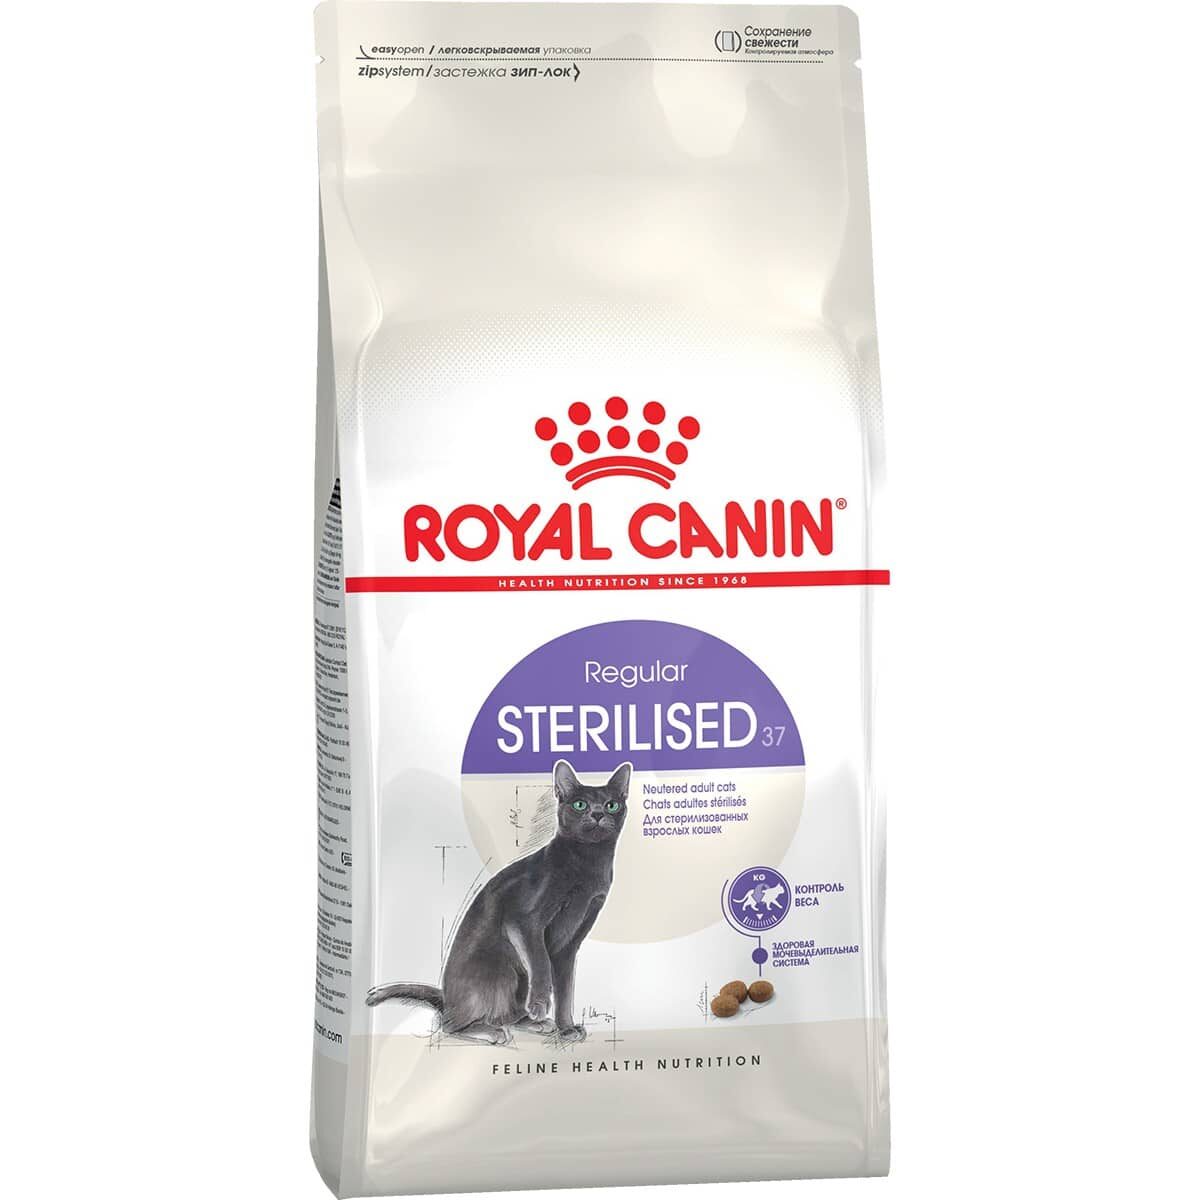 Royal Canin Sterilised 37 2